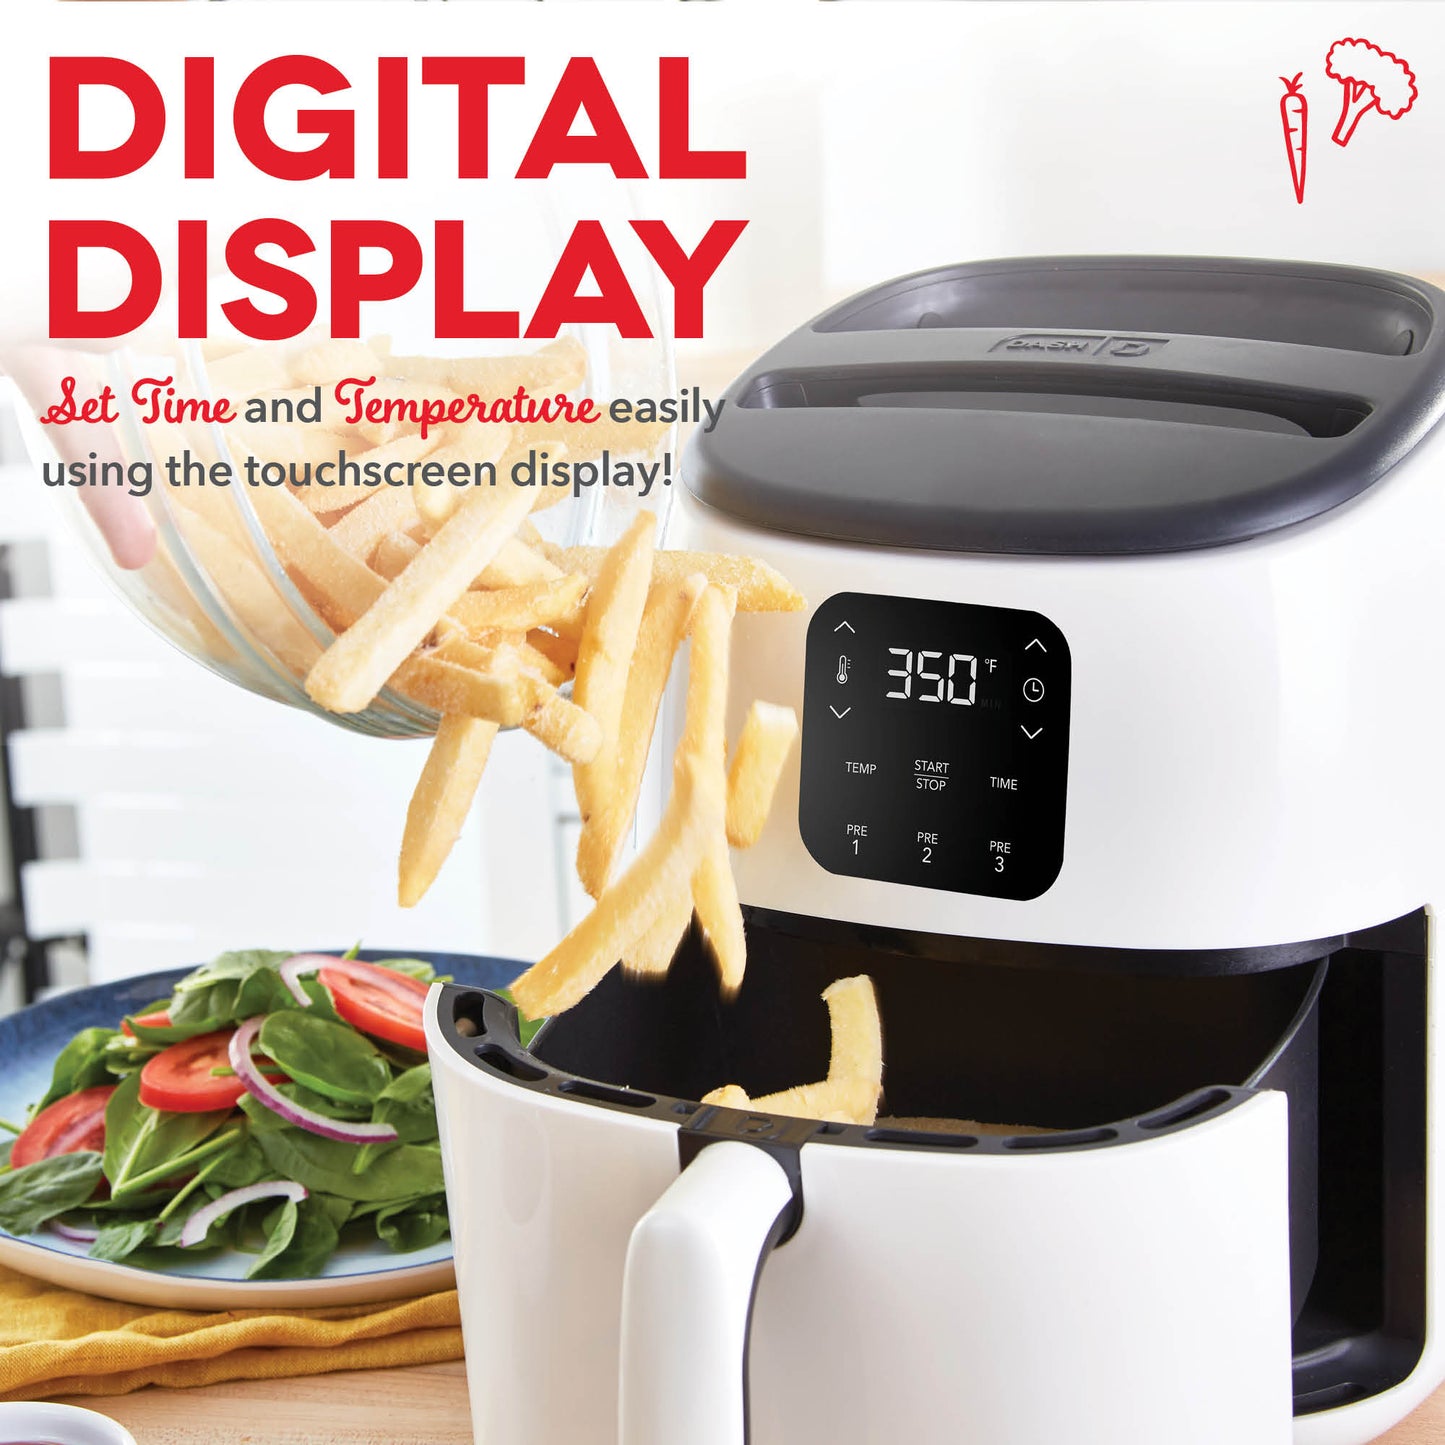 Dash 2.6qt Express Digital Tasti-crisp Nonstick Air Fryer : Target